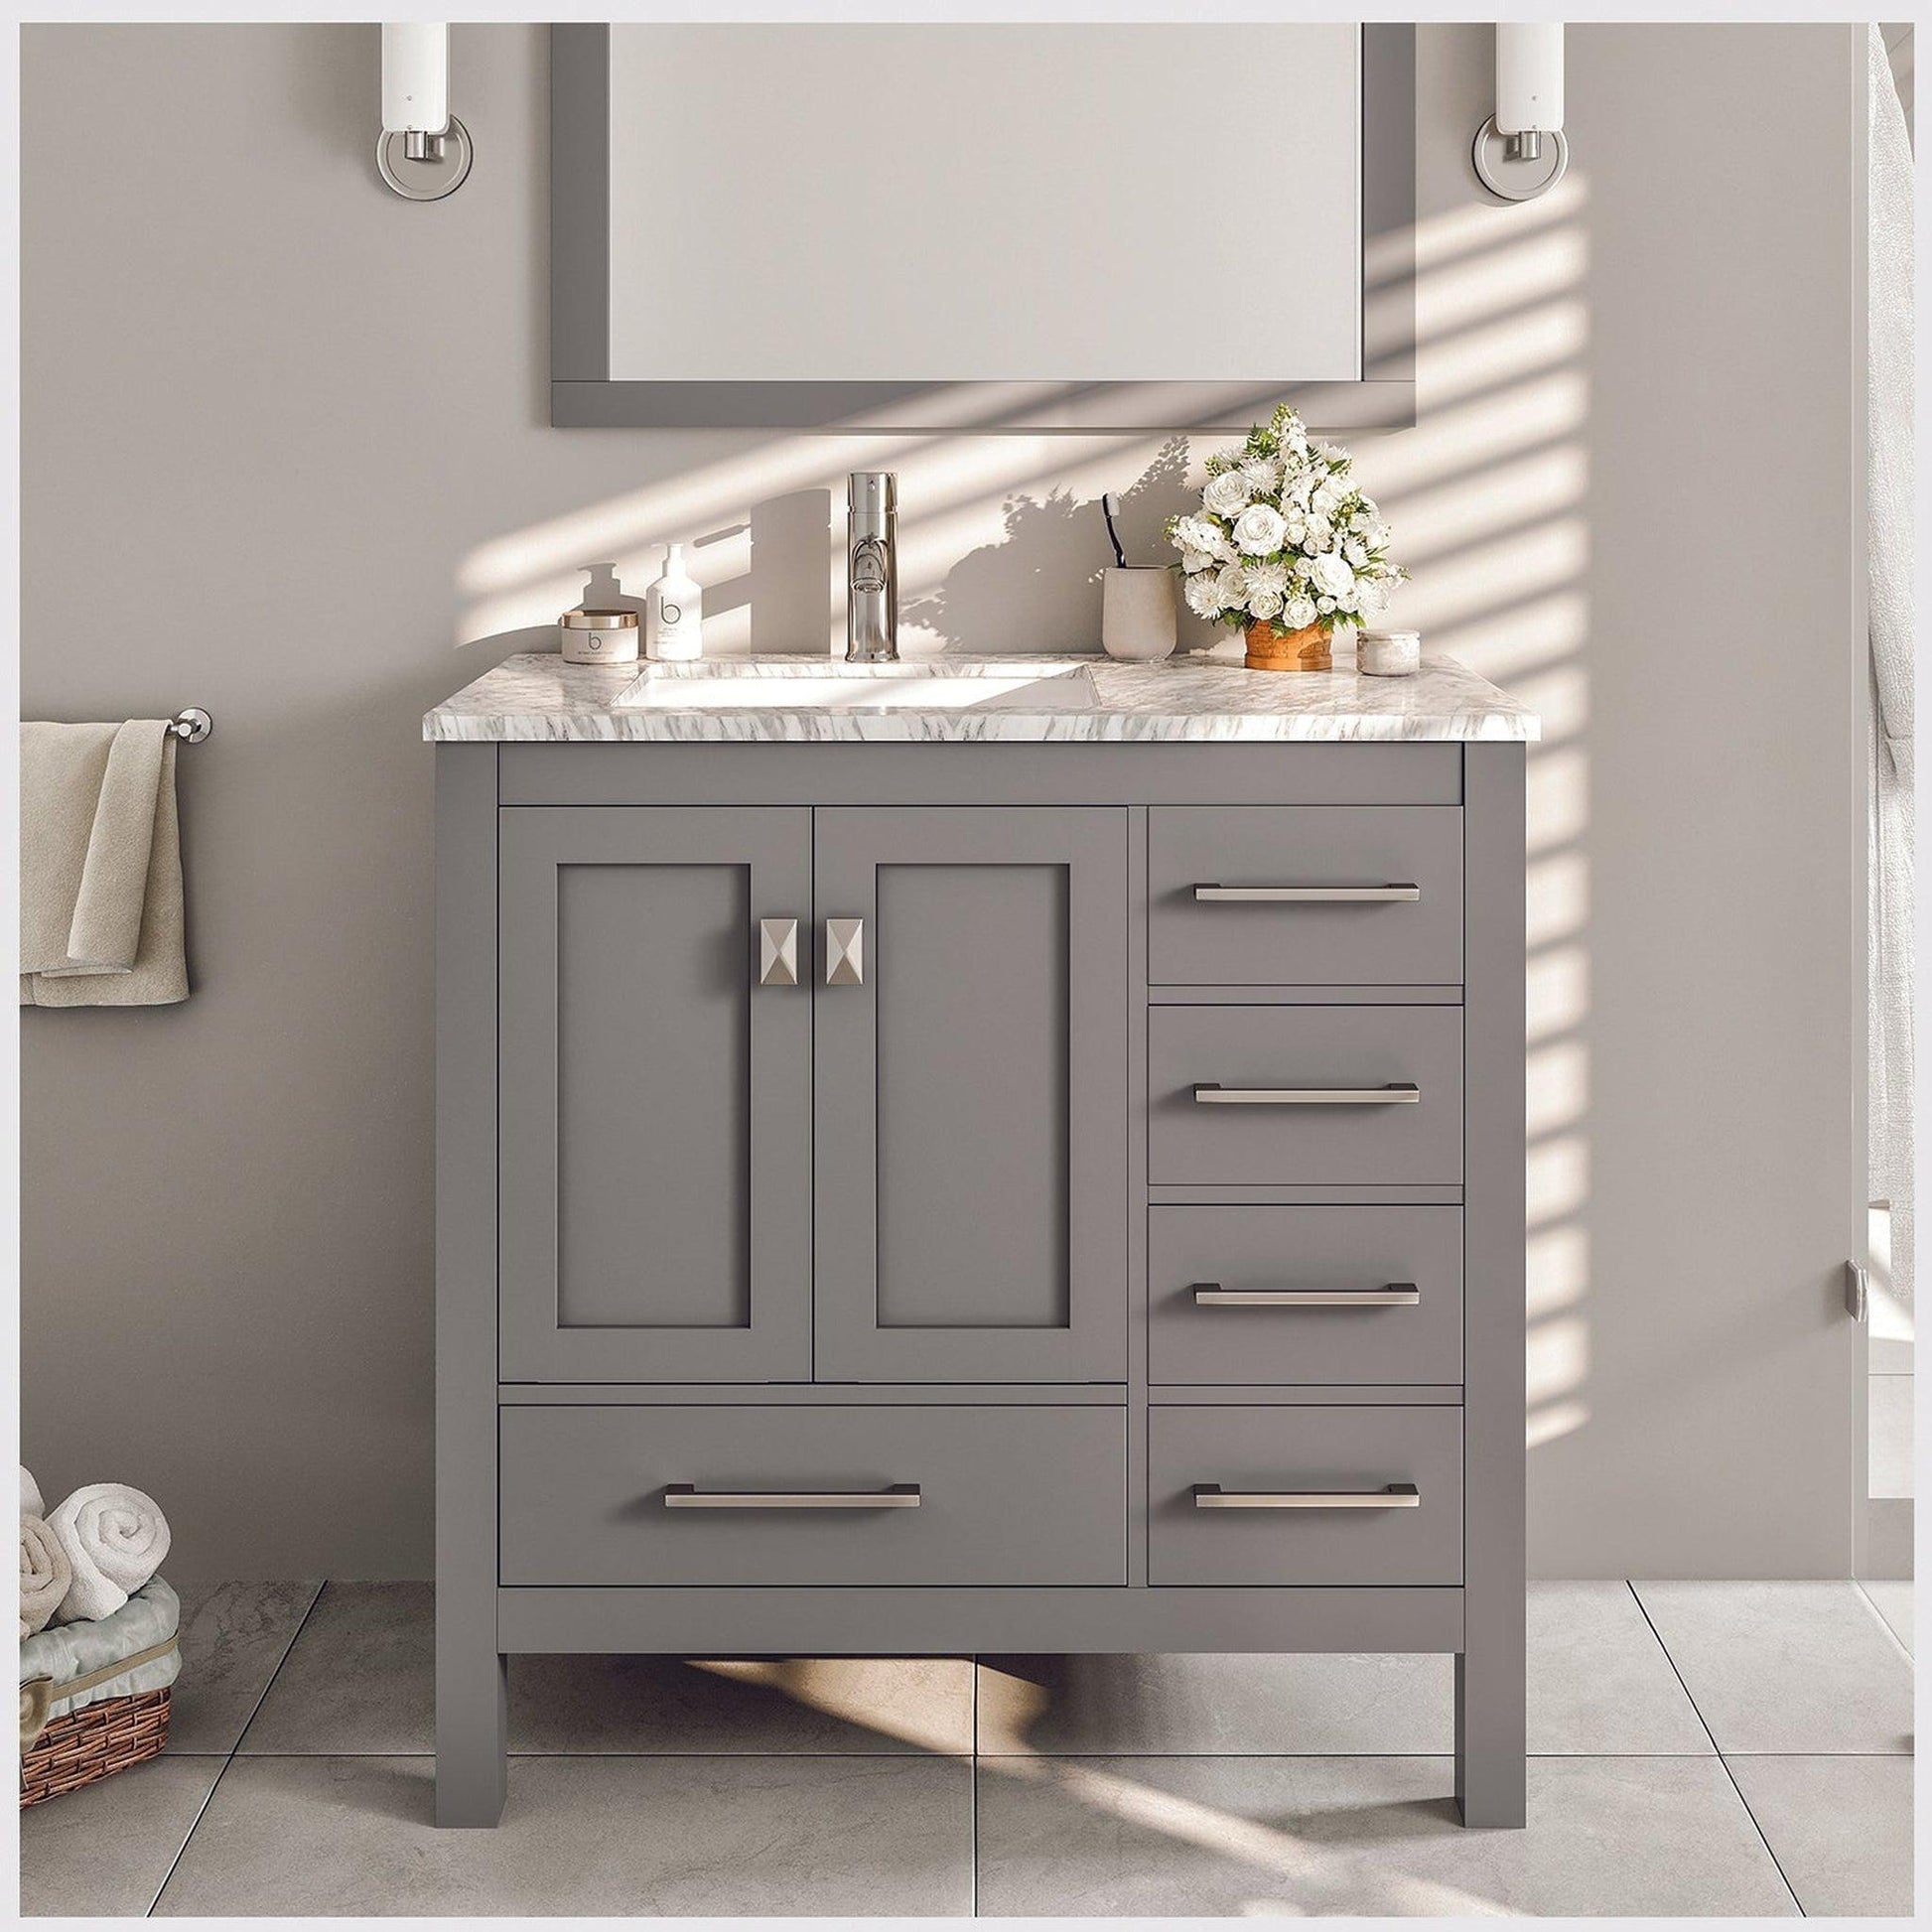 Eviva London 36" x 34" Gray Freestanding Bathroom Vanity With Carrara Marble Countertop and Single Undermount Sink